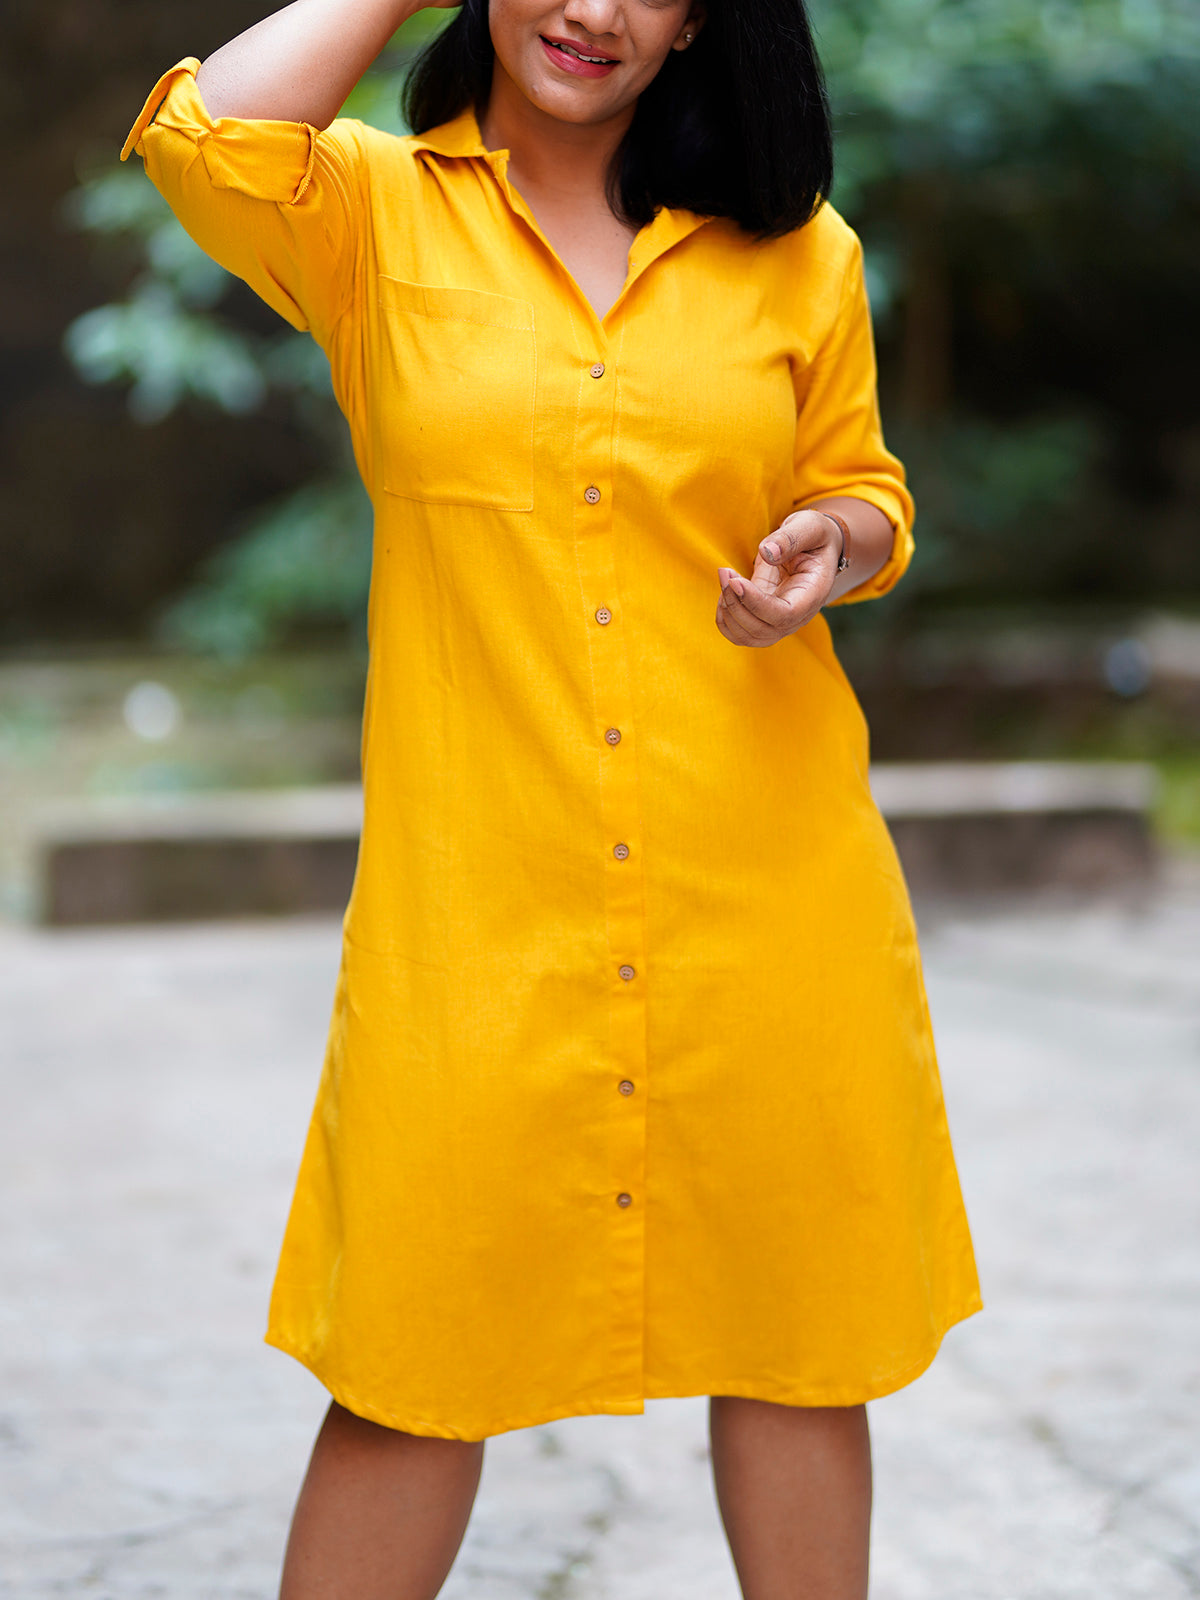 Orange and Pink Handloom Cotton Midi Dress with Embroidery – Madhurima  Bhattacharjee